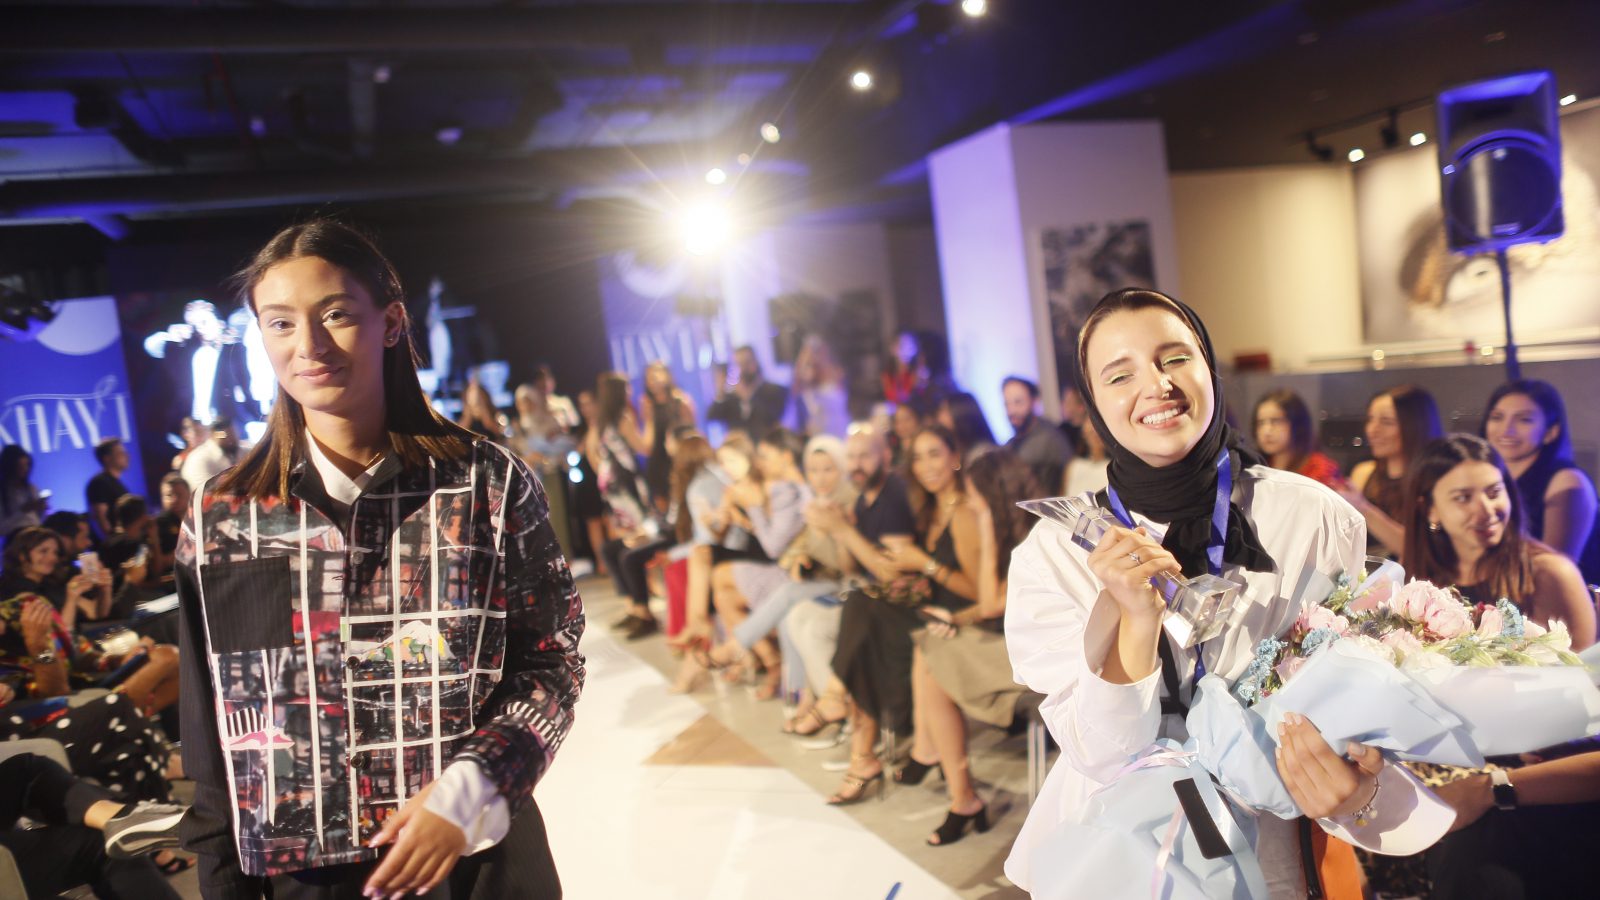 EU-funded Creative Jordan Fashion Designer Competition “Khayt”. 